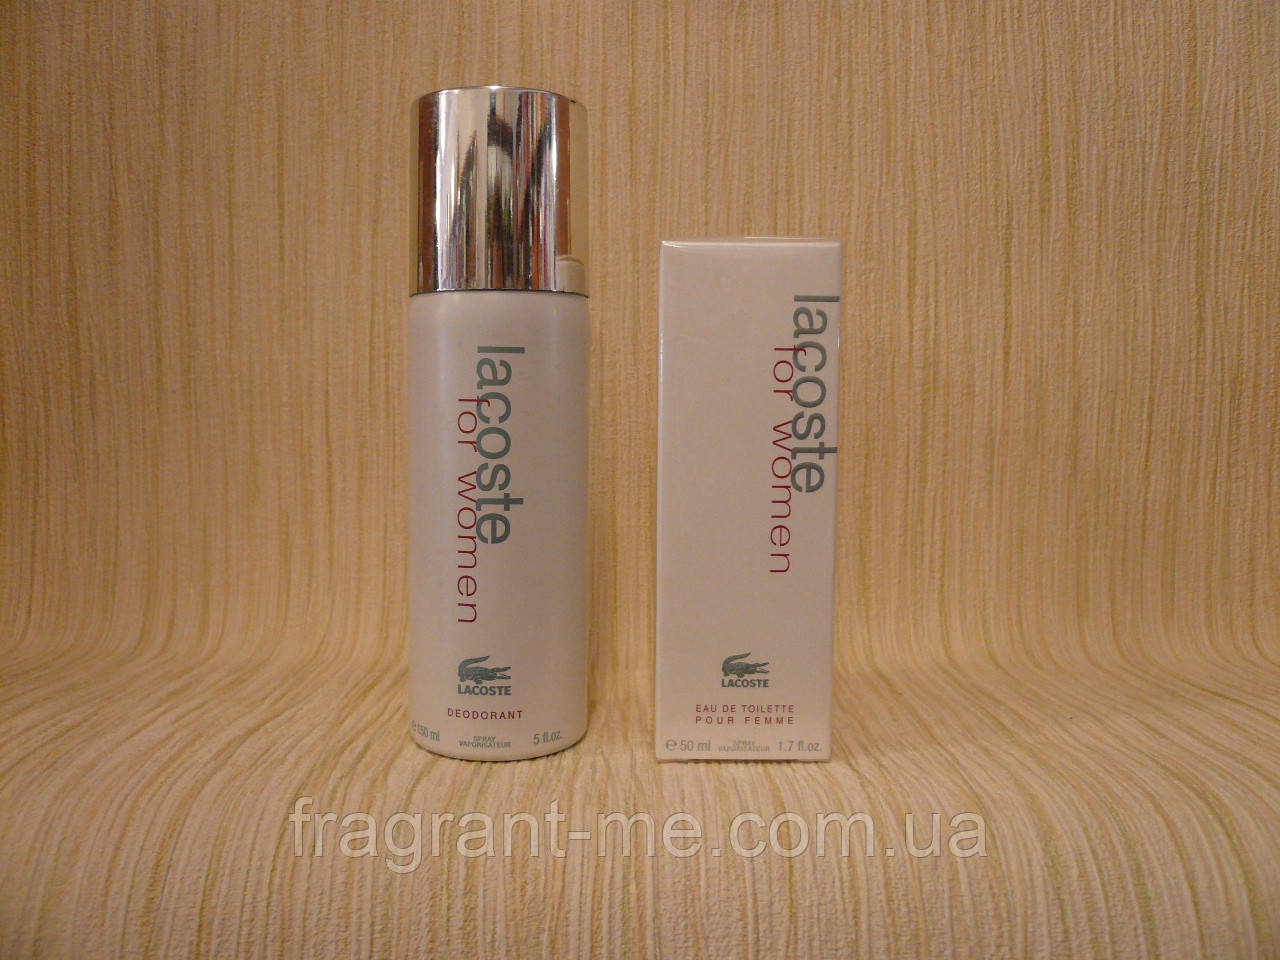 Lacoste — Lacoste For Women (1999) — Дезодорант-спрей 150 мл — Рідкий аромат, знятий із виробництва